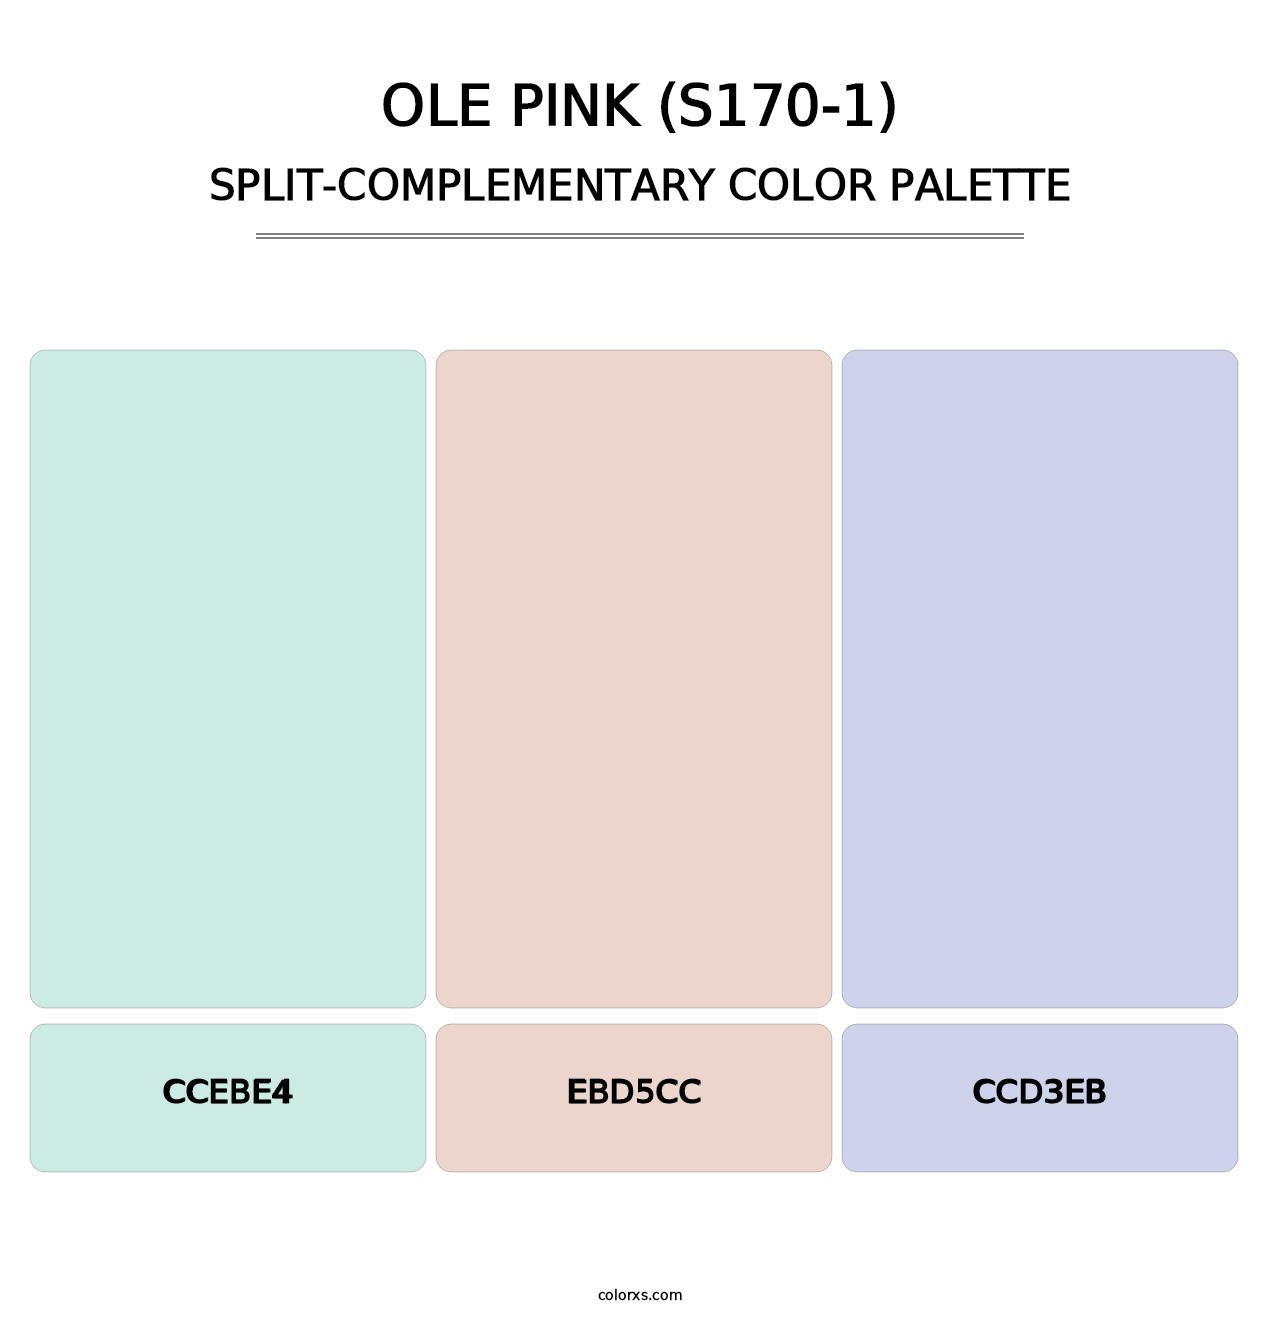 Ole Pink (S170-1) - Split-Complementary Color Palette